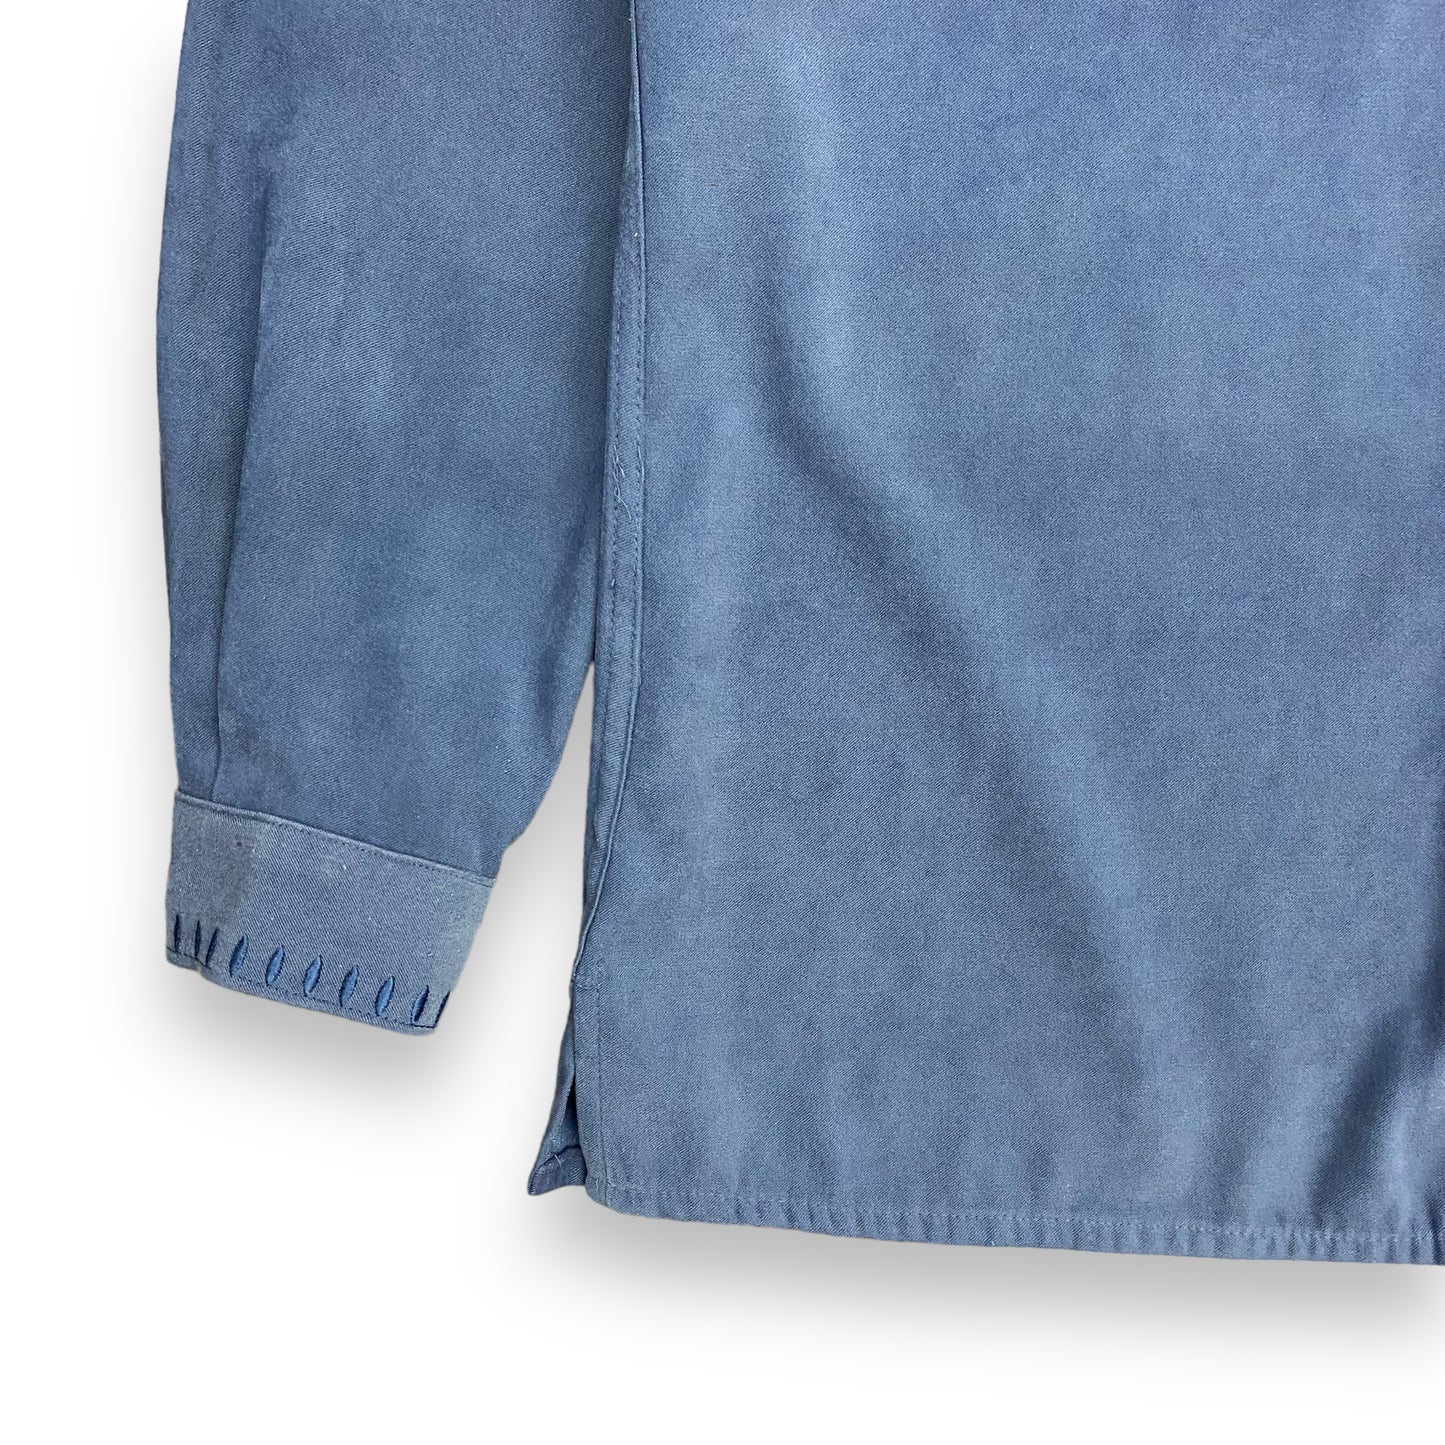 Vintage 1980s Royal Blue Suede Button Up Shirt - Size Medium